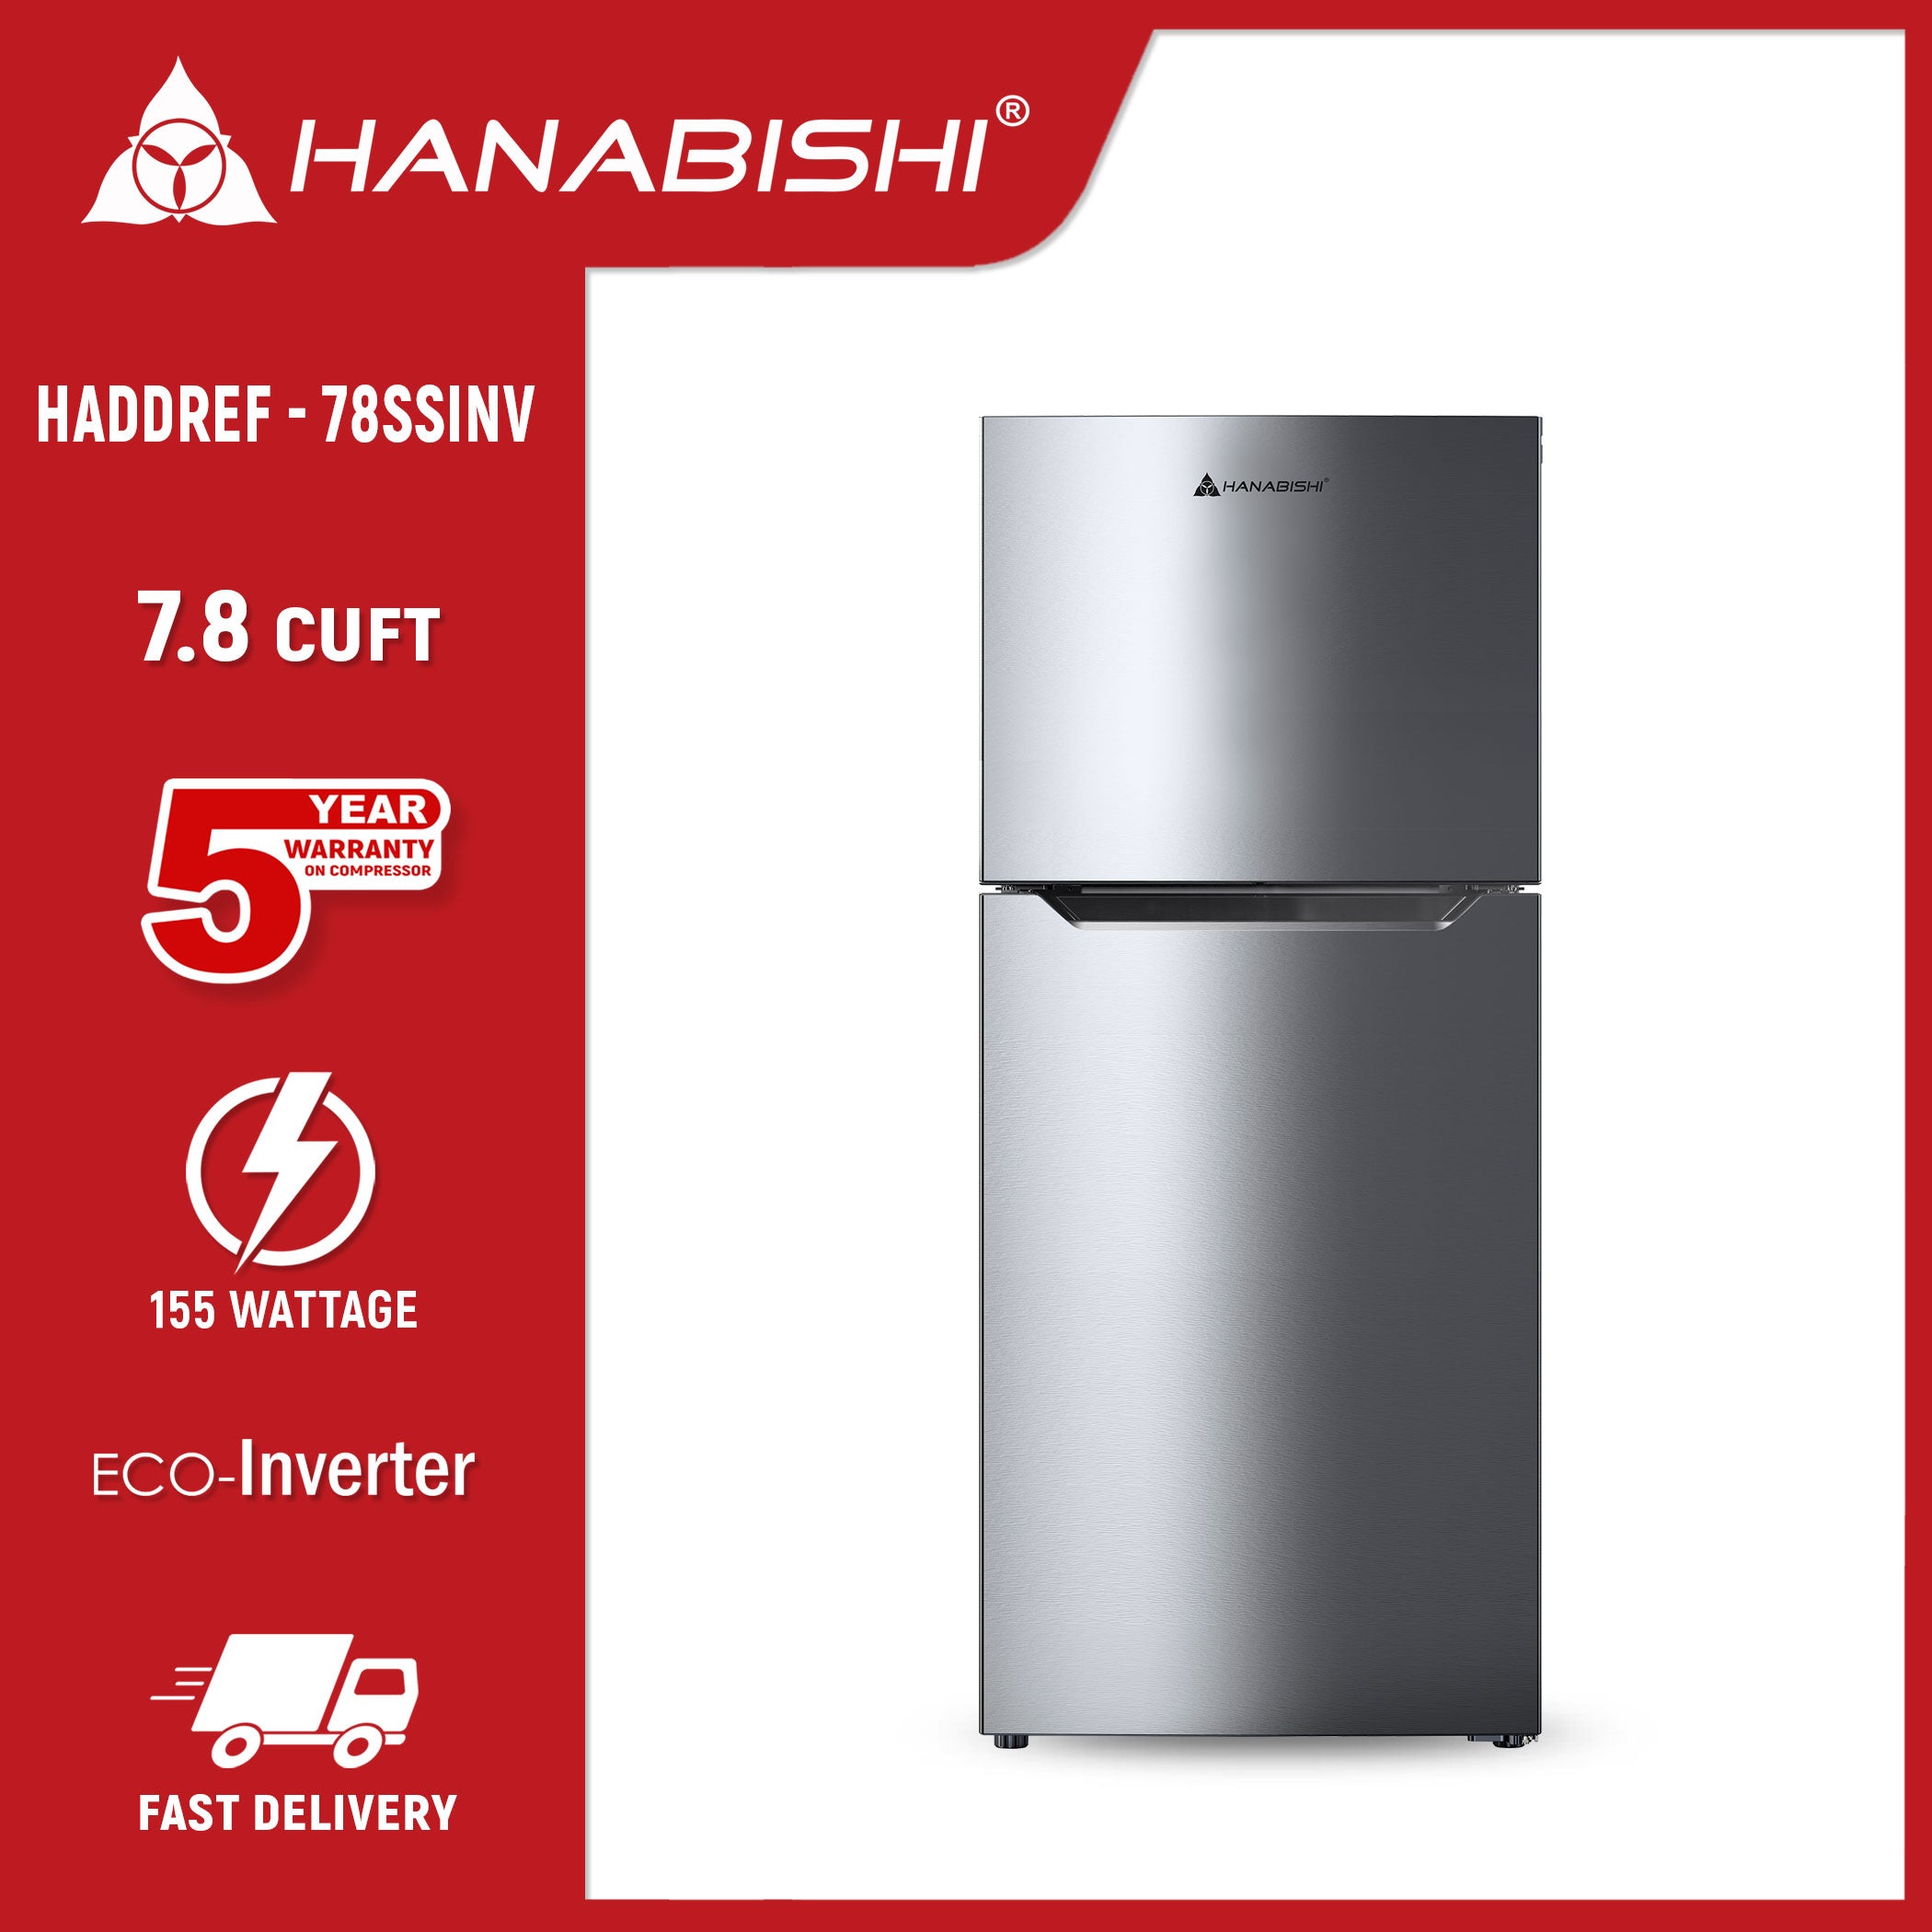 HANABISHI HADDREF-78SSINV 7.8 cu.ft. Double Door Inverter Refrigerator Hanabishi